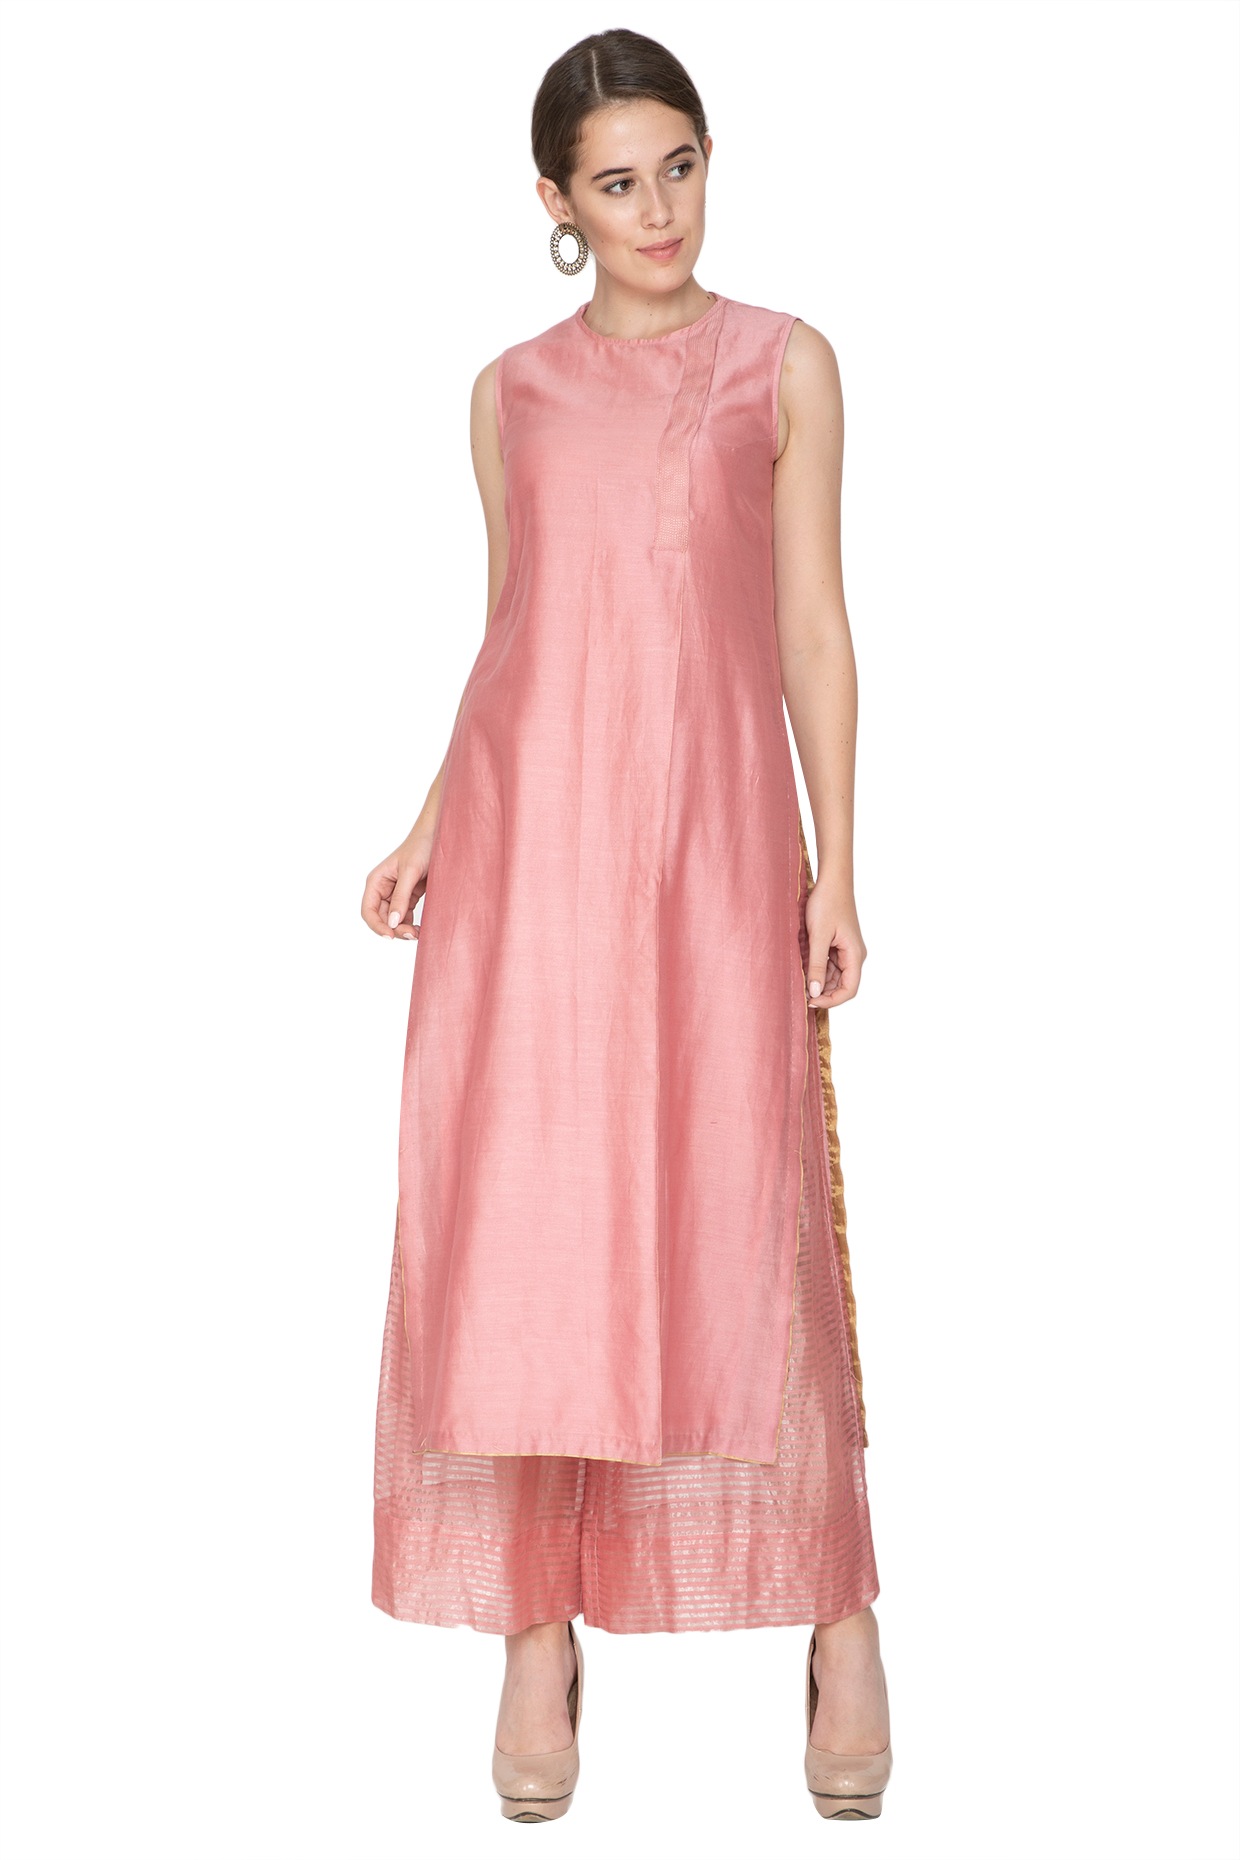 Pink Jaipuri Women's Fashion Cotton Kurti with Palazzo Pants Set –  www.jaipurtohome.com